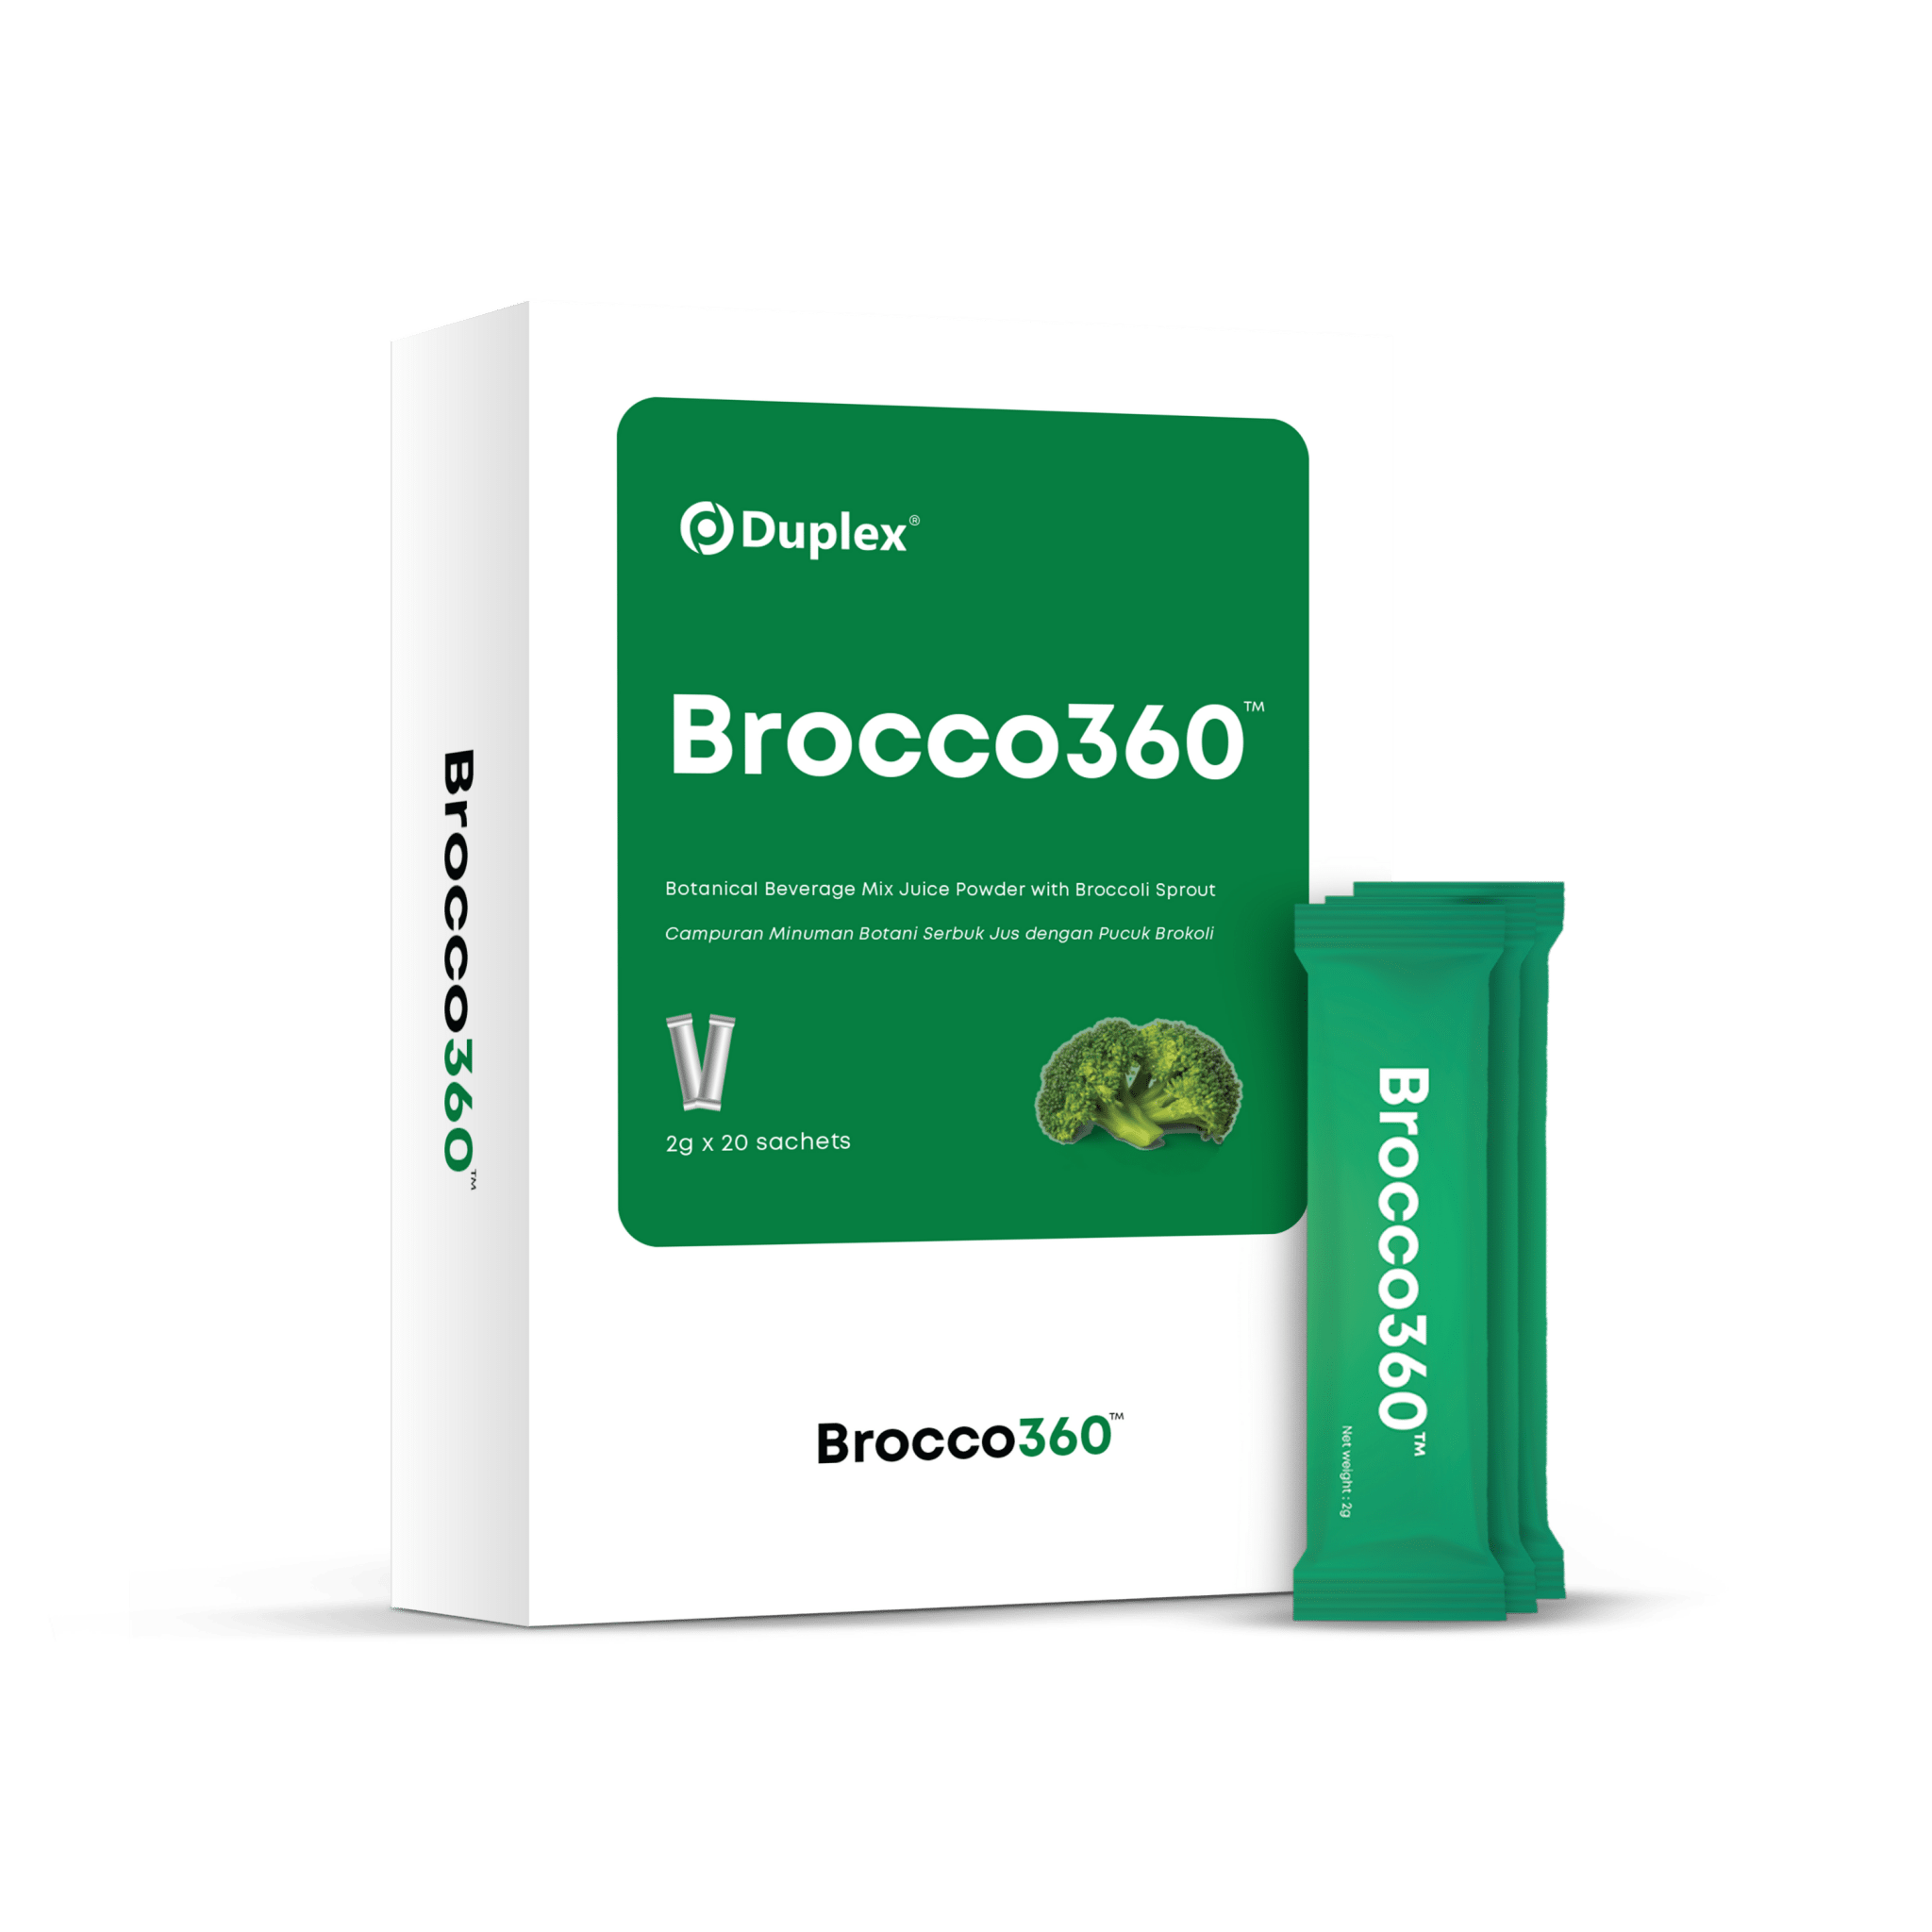 Duplex Brocco360 20s- Duplex Healthcare - Malaysia